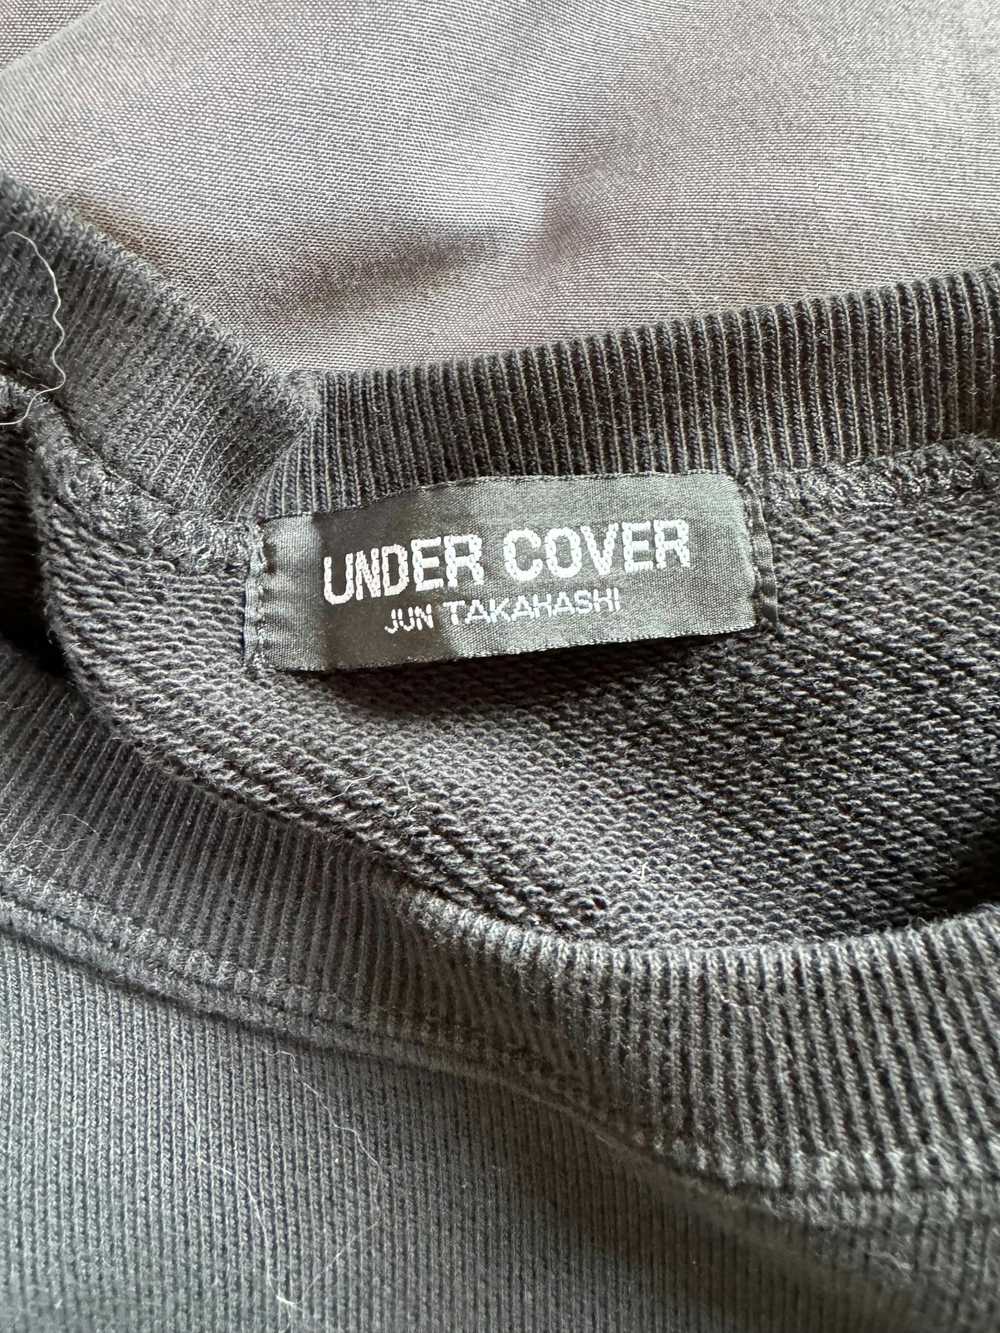 Undercover Undercover Sweatshirt Size M (2) - image 3